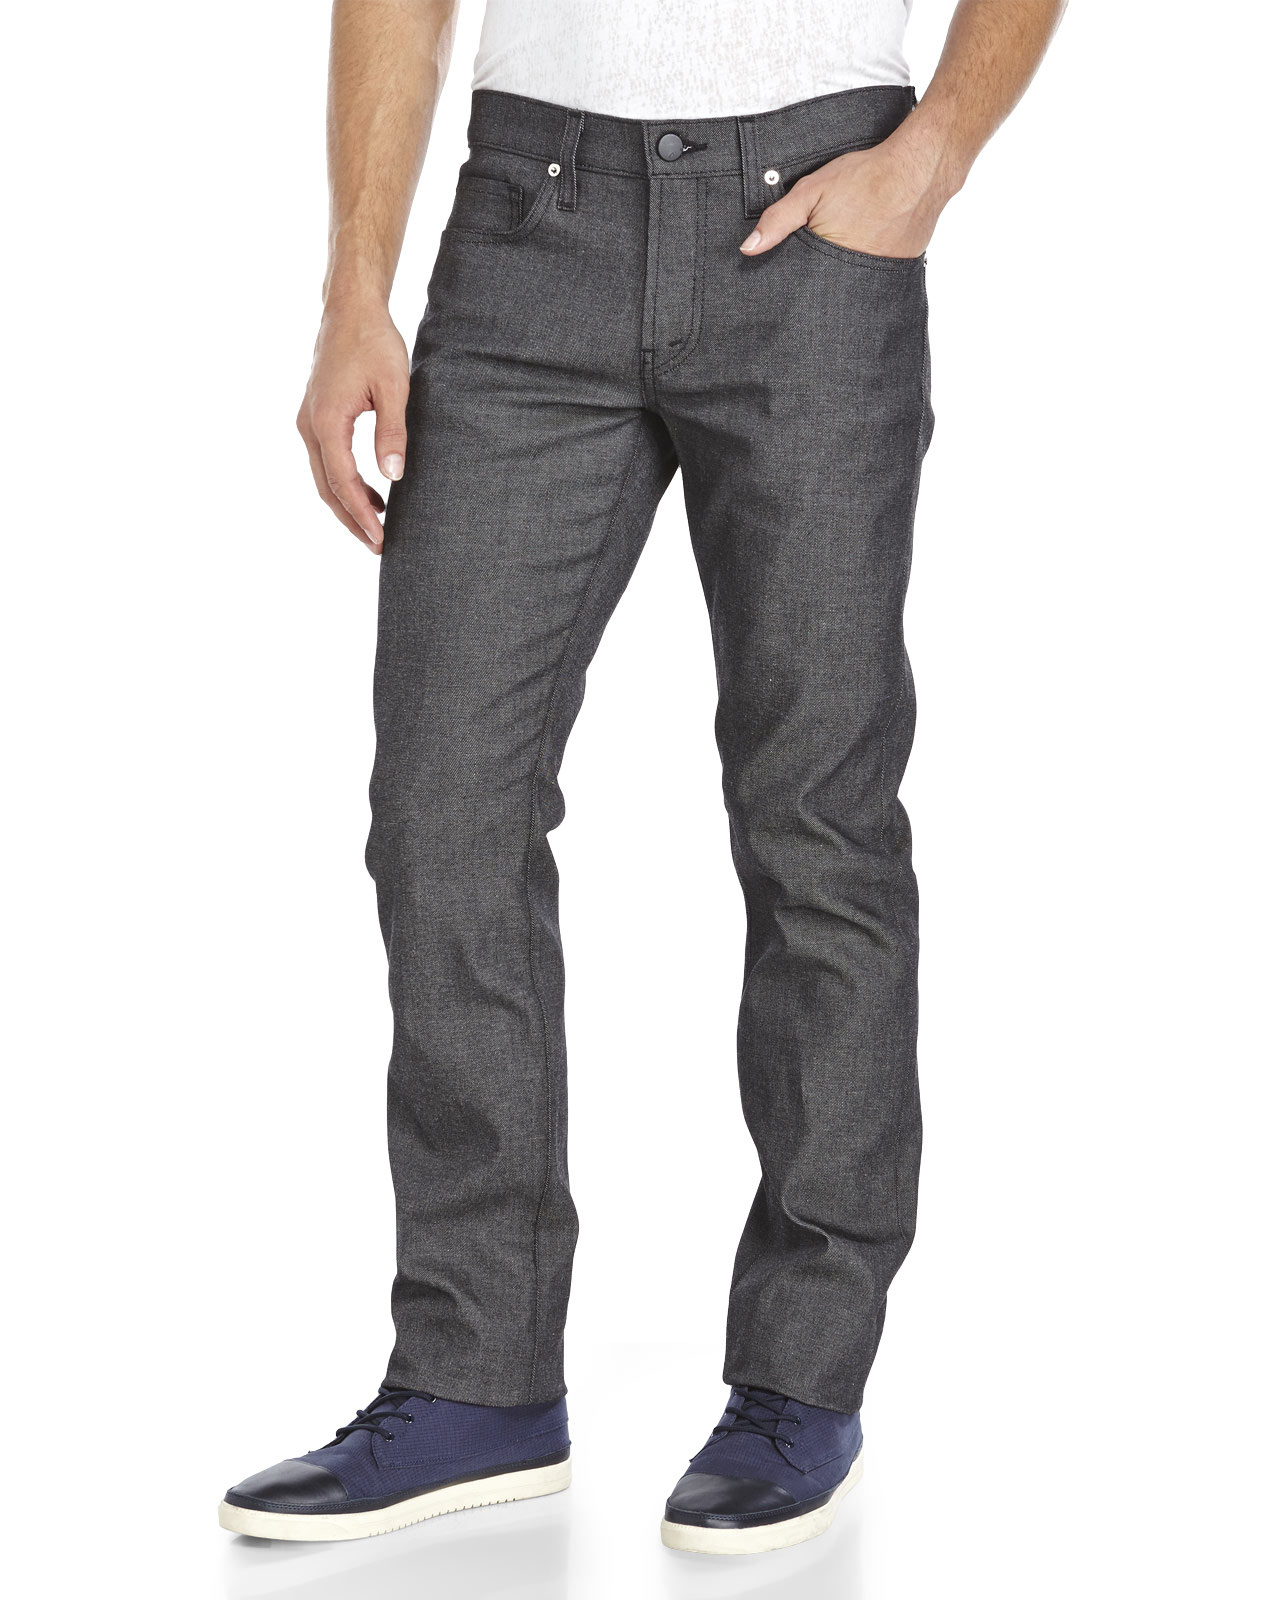 Levi jeans for men bootcut